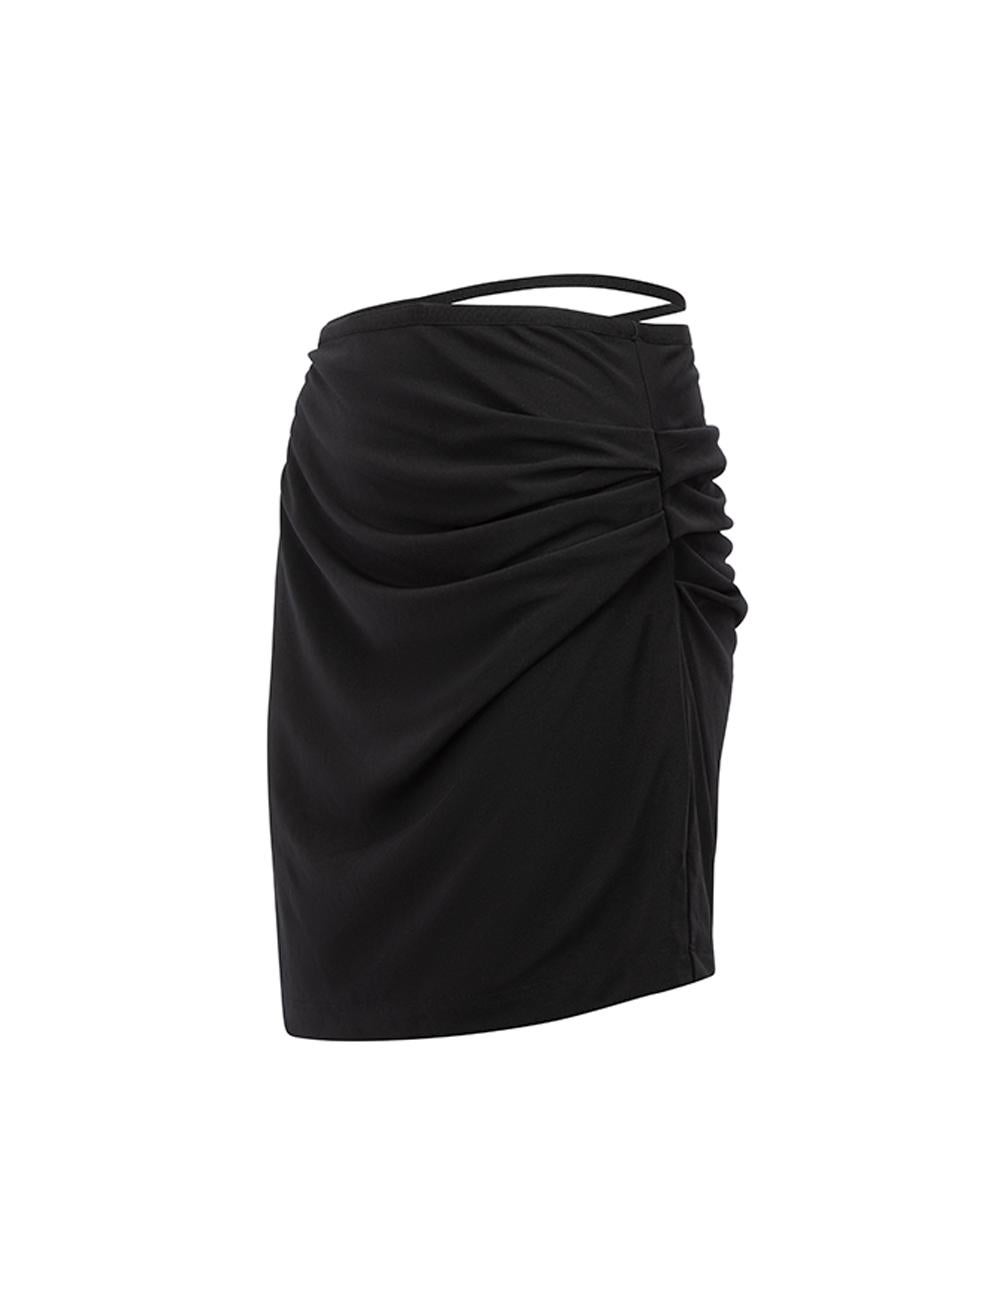 Helmut Lang Women's Black Strap Twist Accent Mini Skirt 1